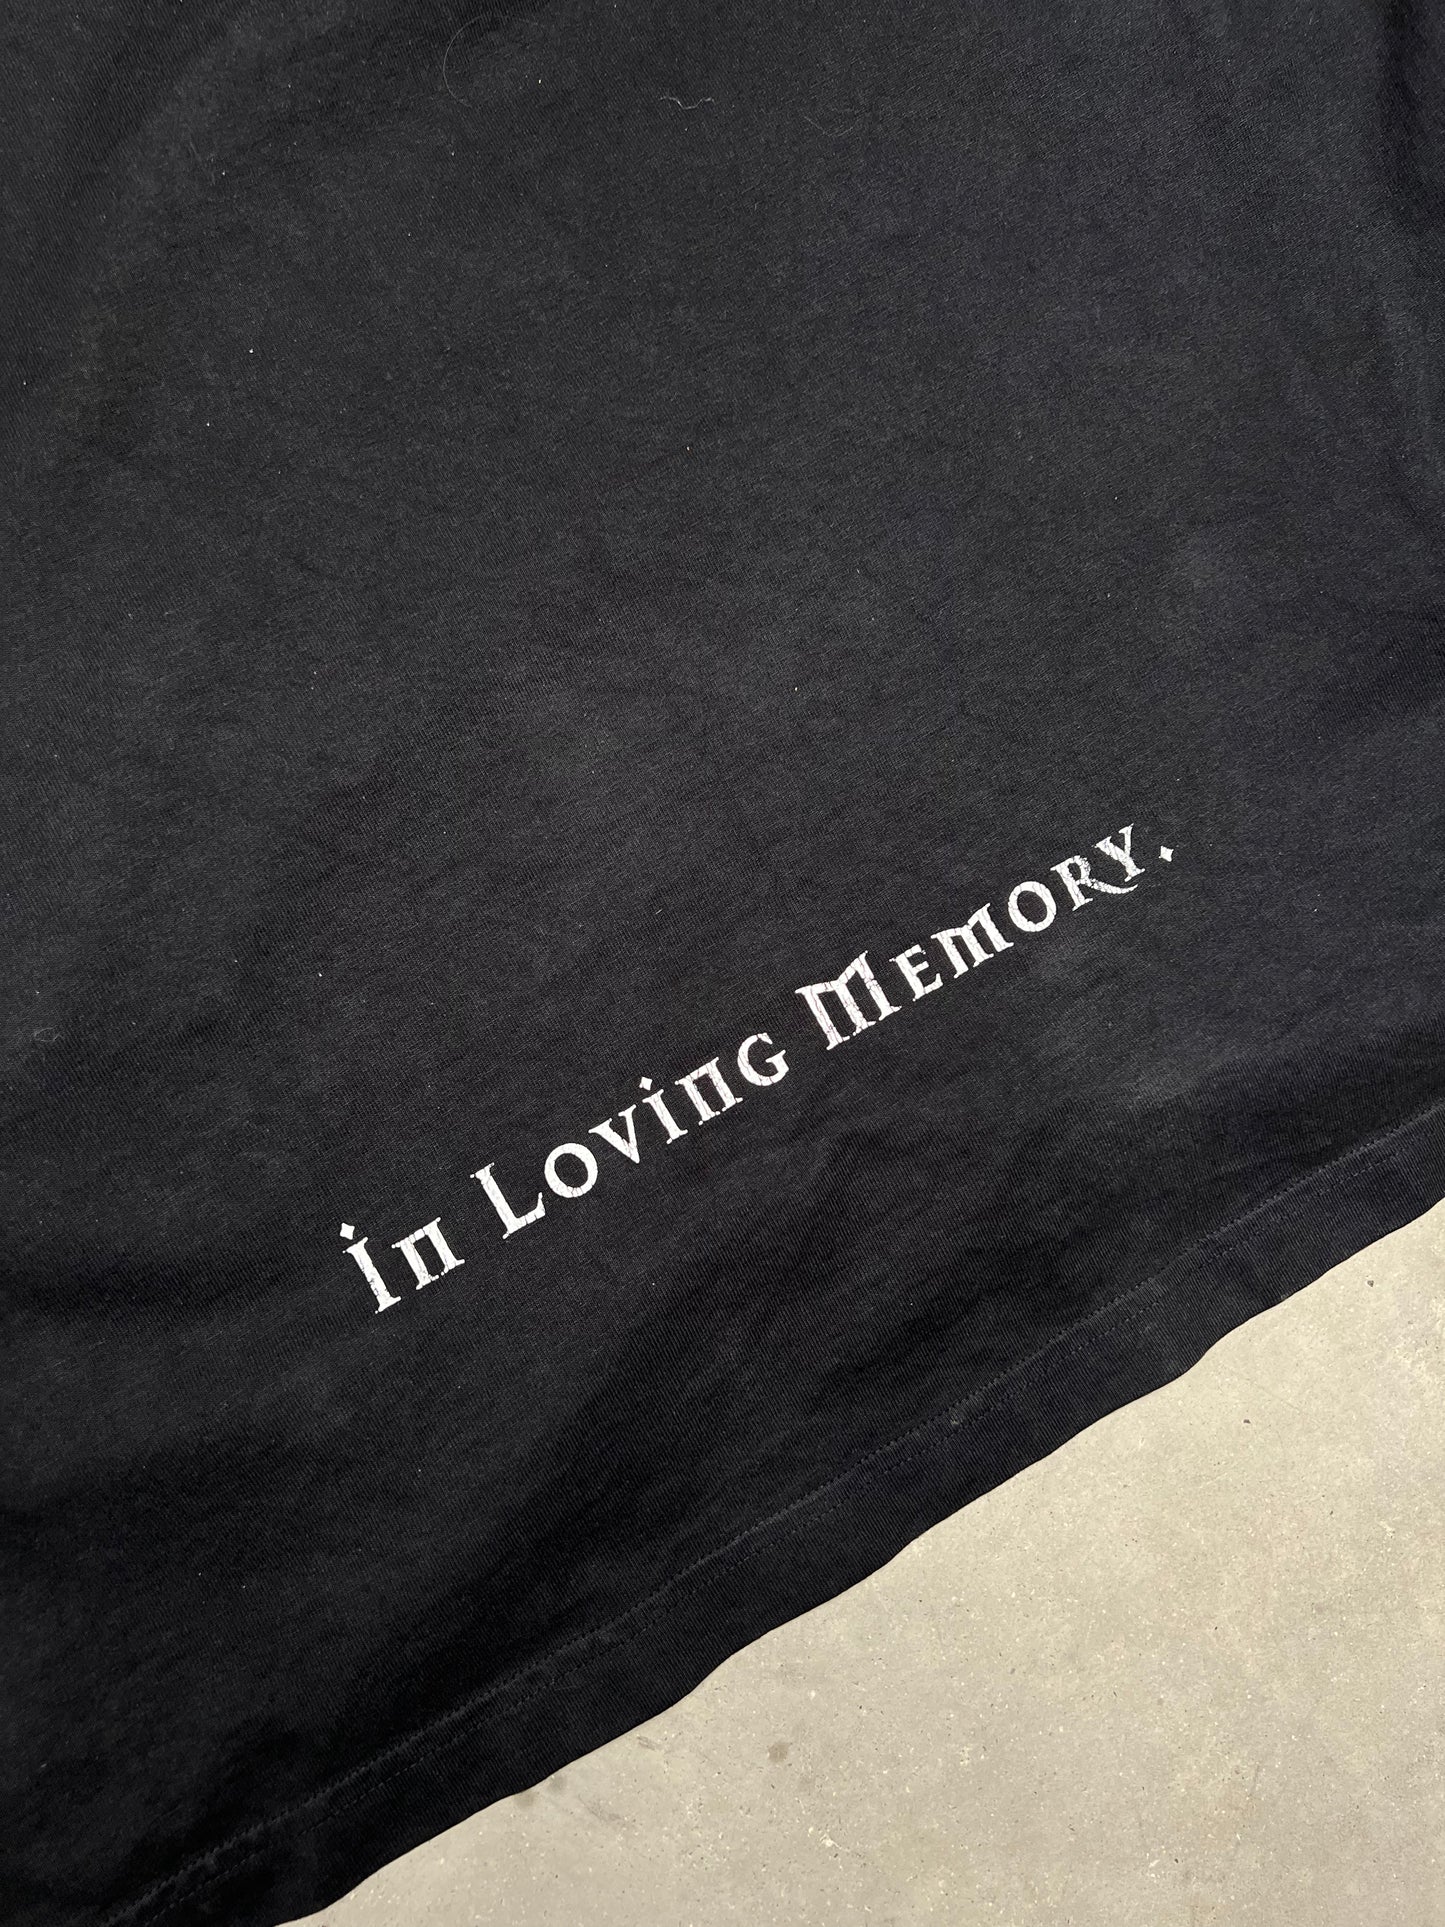 Balenciaga x Yeezy x DMX A Tribute Oversized Longsleeve T-Shirt